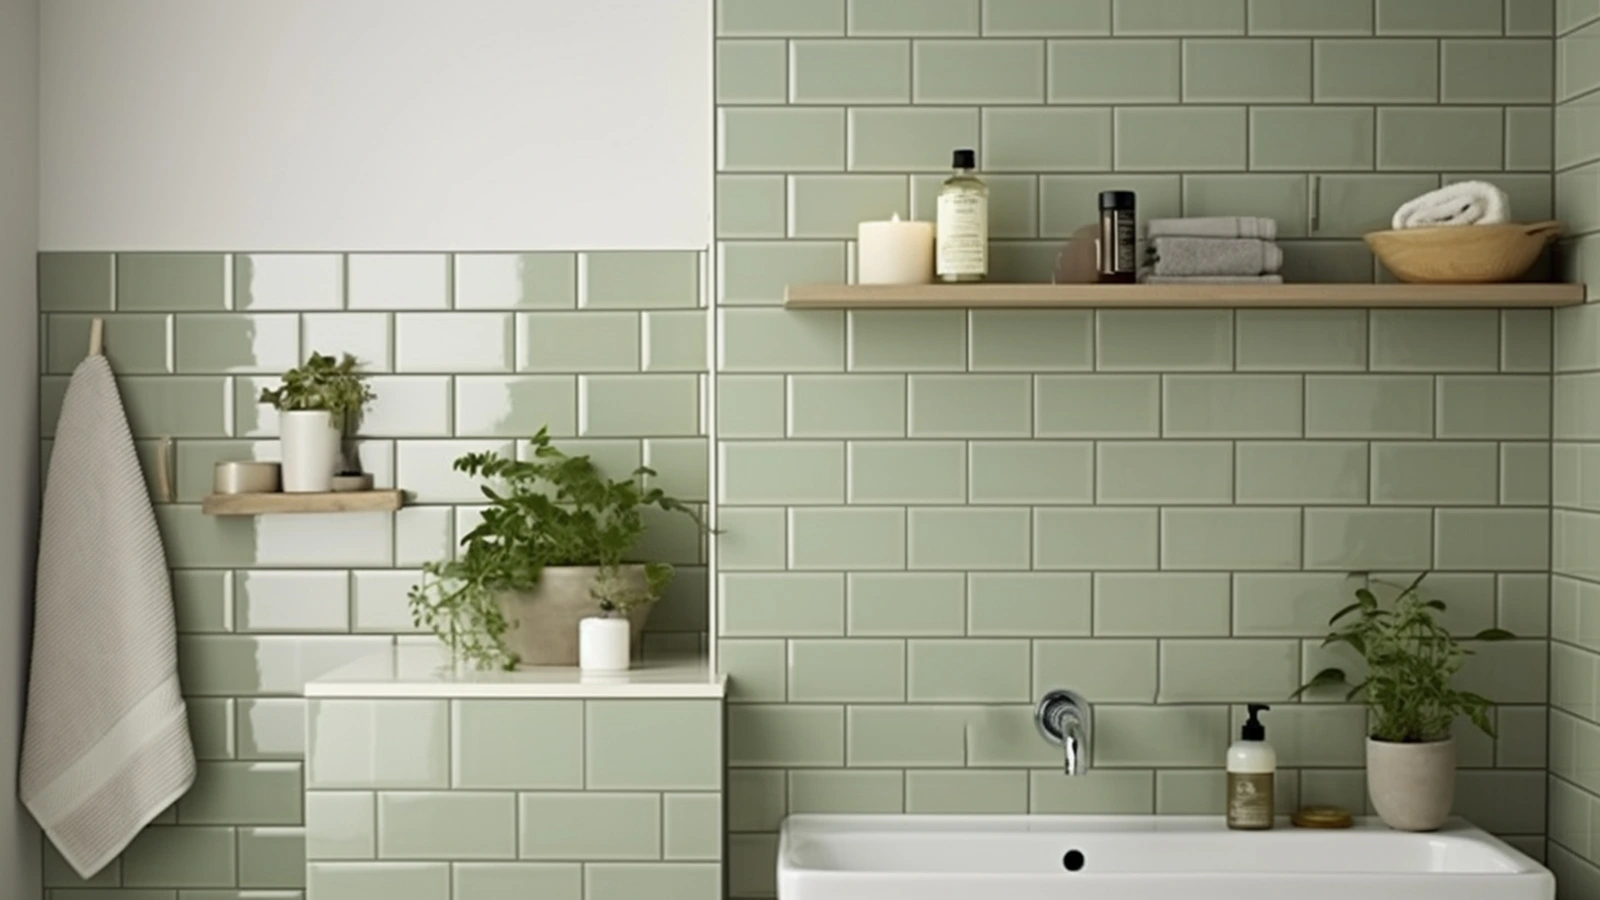 Sage green bathroom decor ideas: A bathroom with green tiles and a sink.